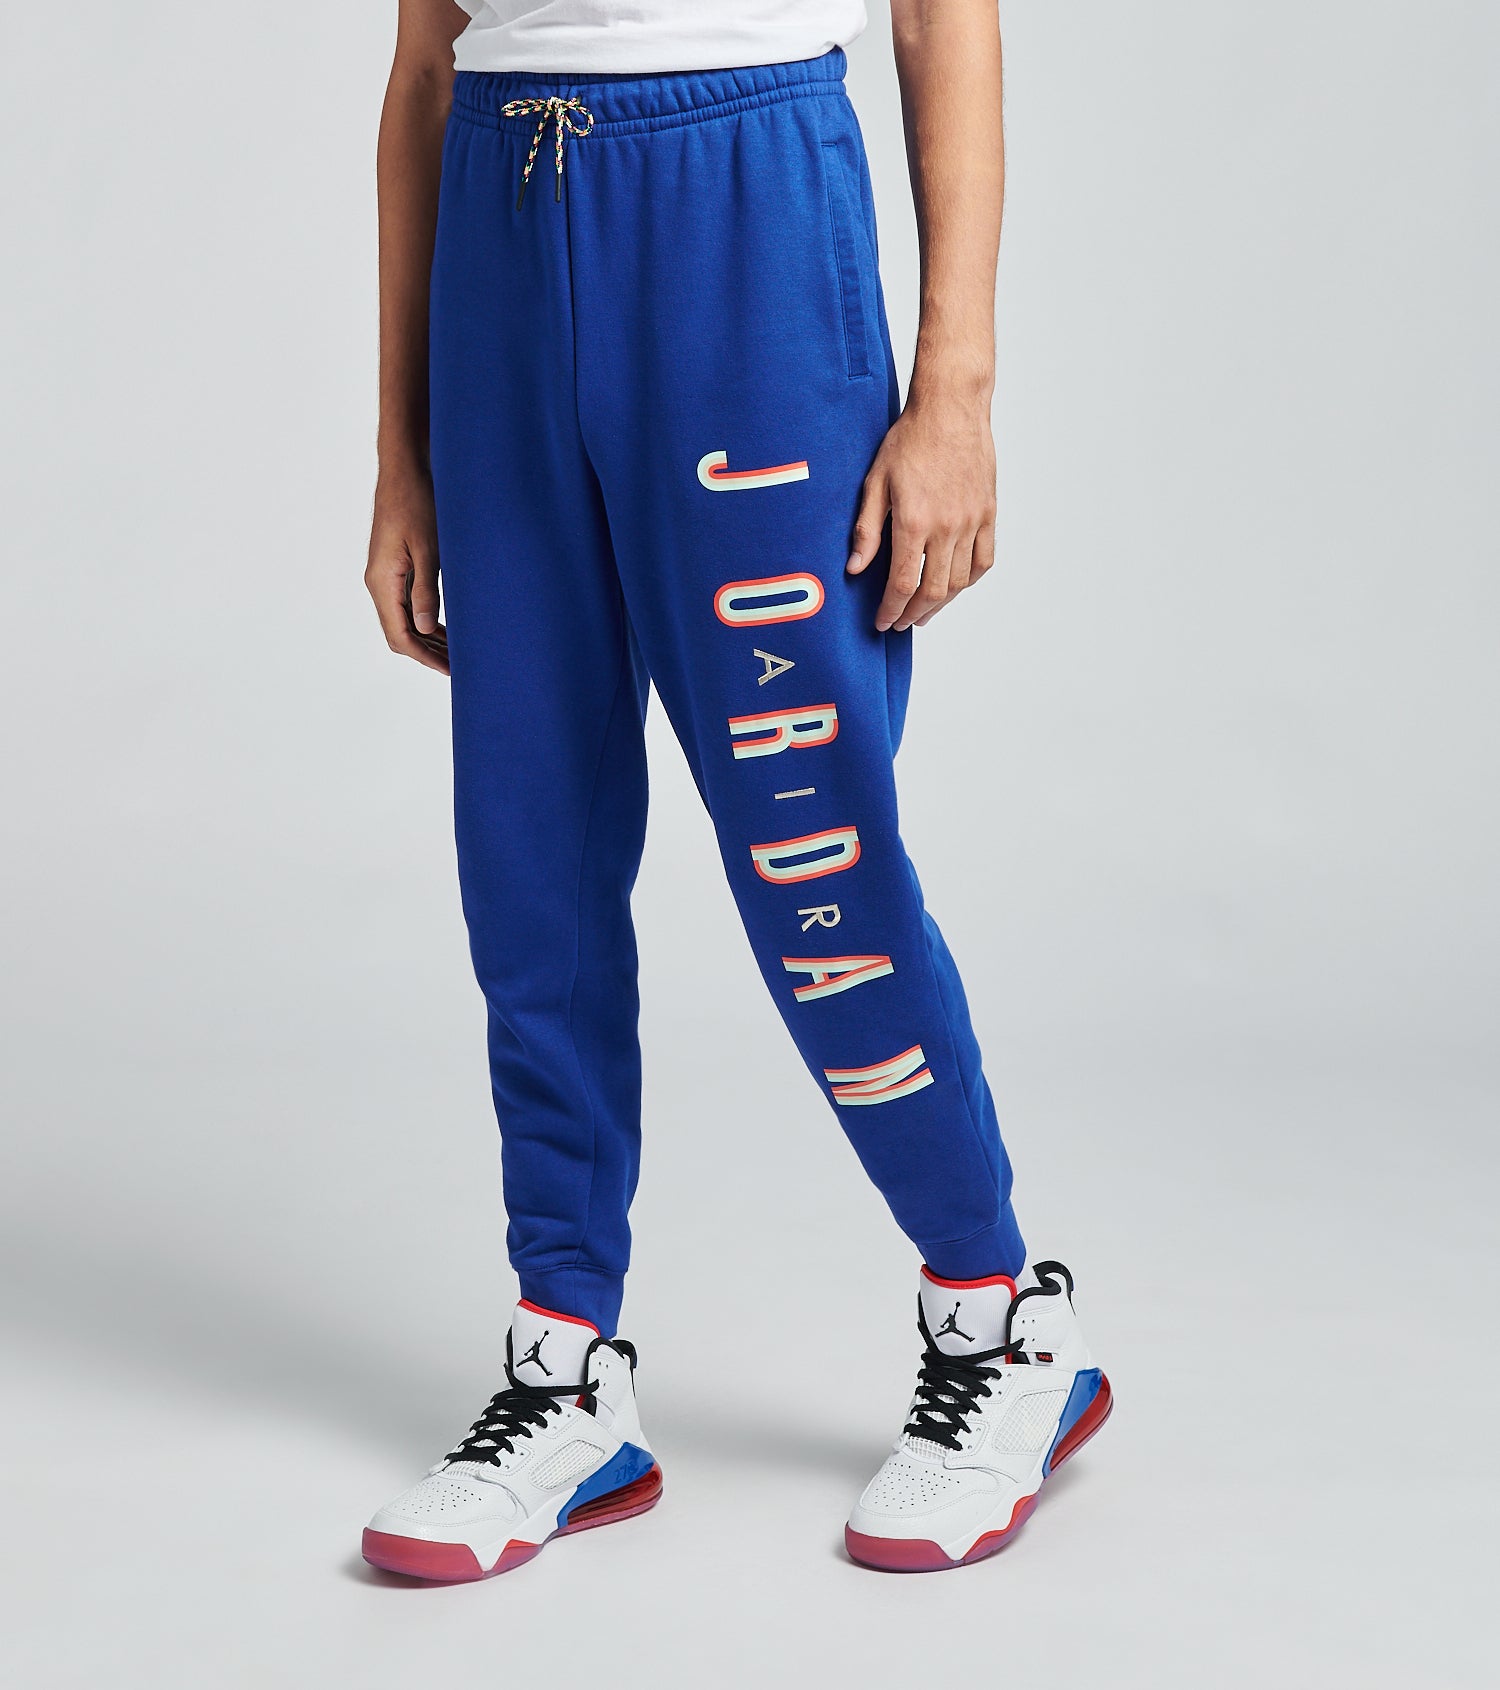 Jordan Sport DNA HBR Pants in Blue Size 